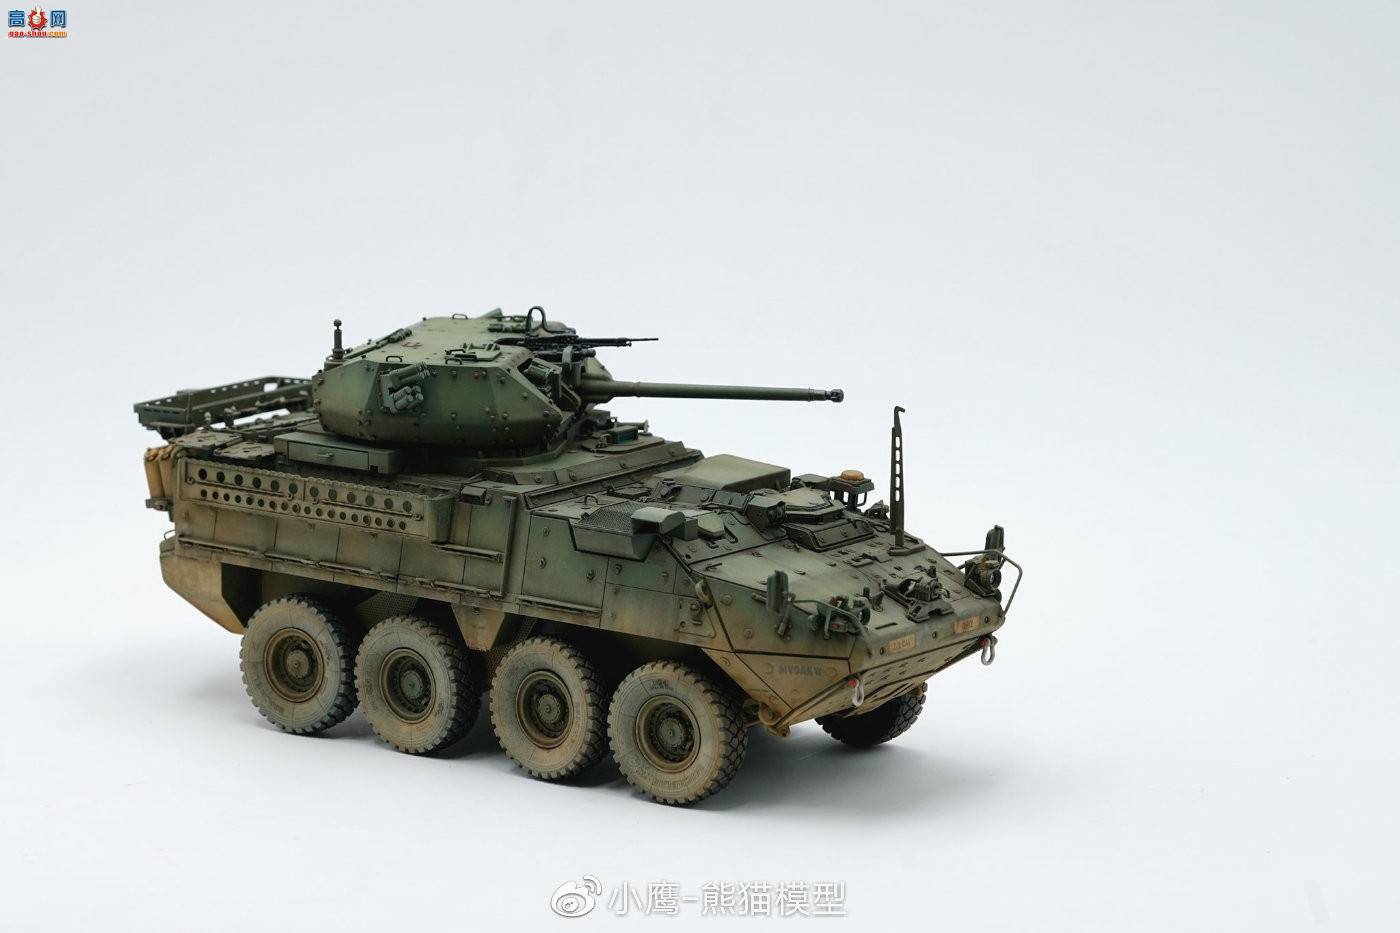 Panda Hobby 1/35 M1296 Stryker Dragoon IFV